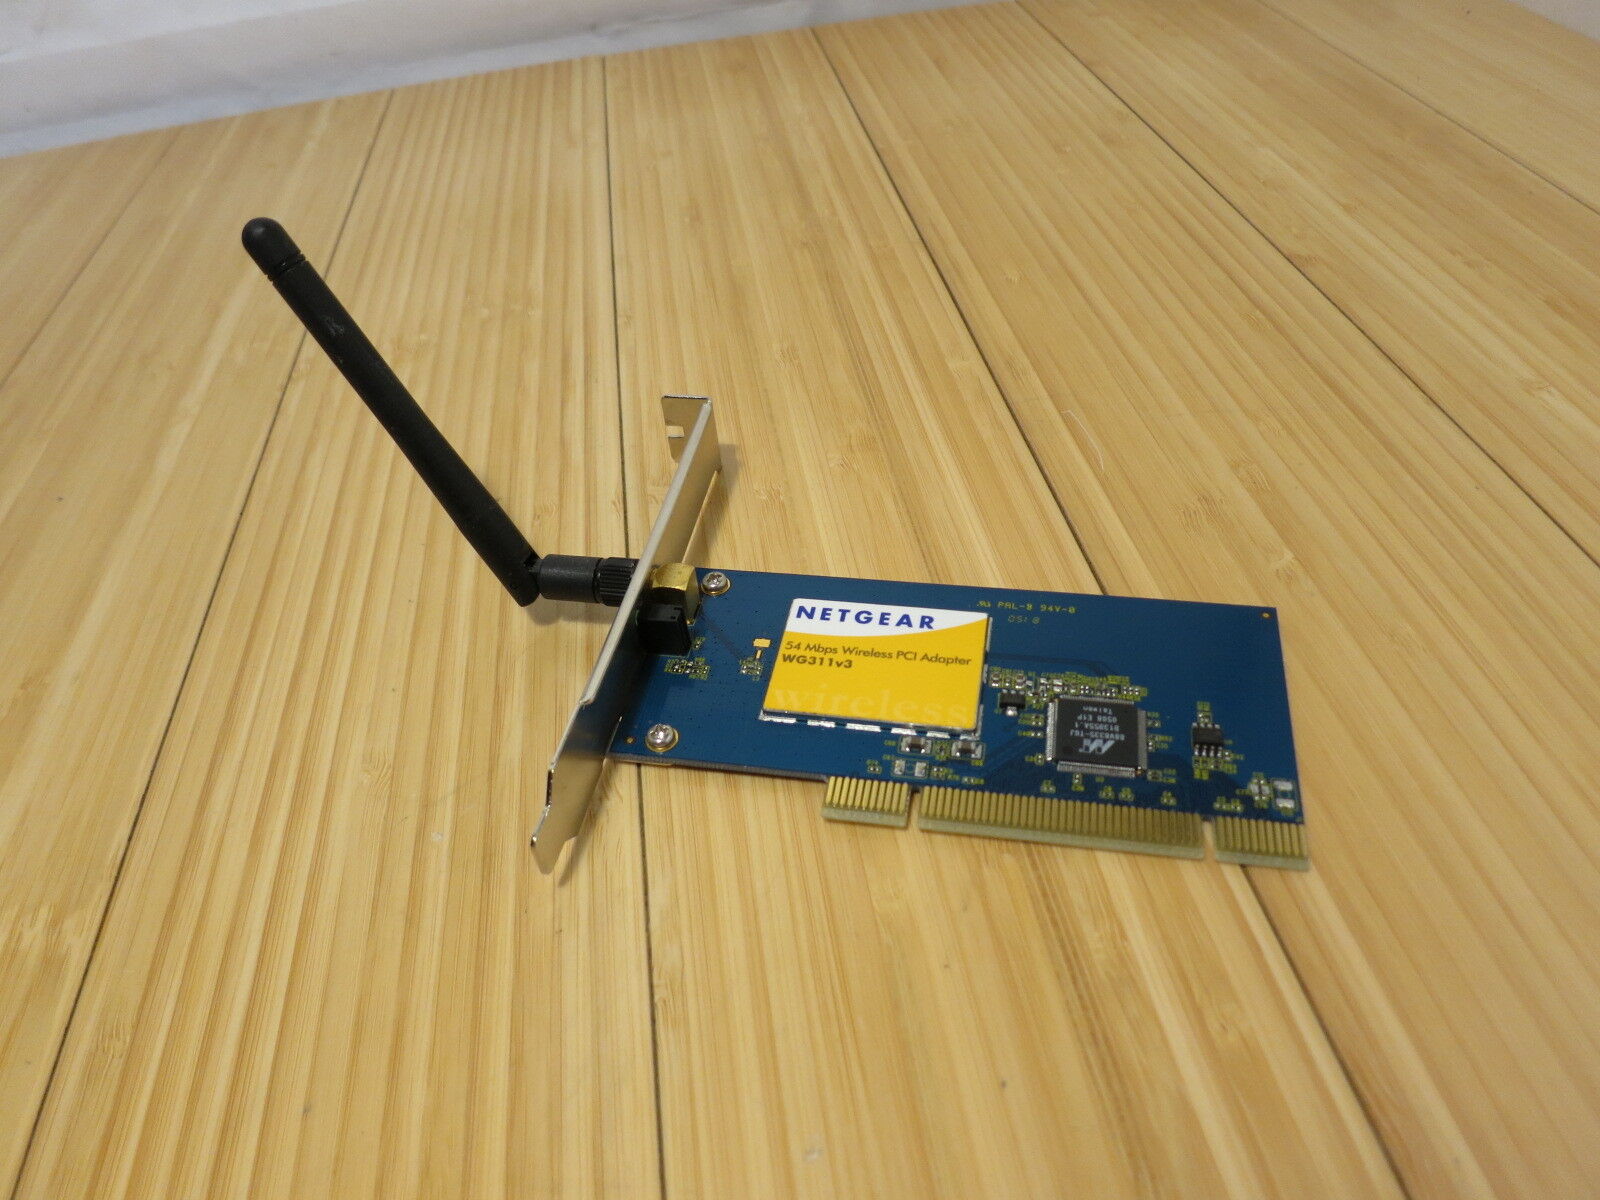 Netgear wg311 v3 Wireless PCI Card Adapter 54 Mbps